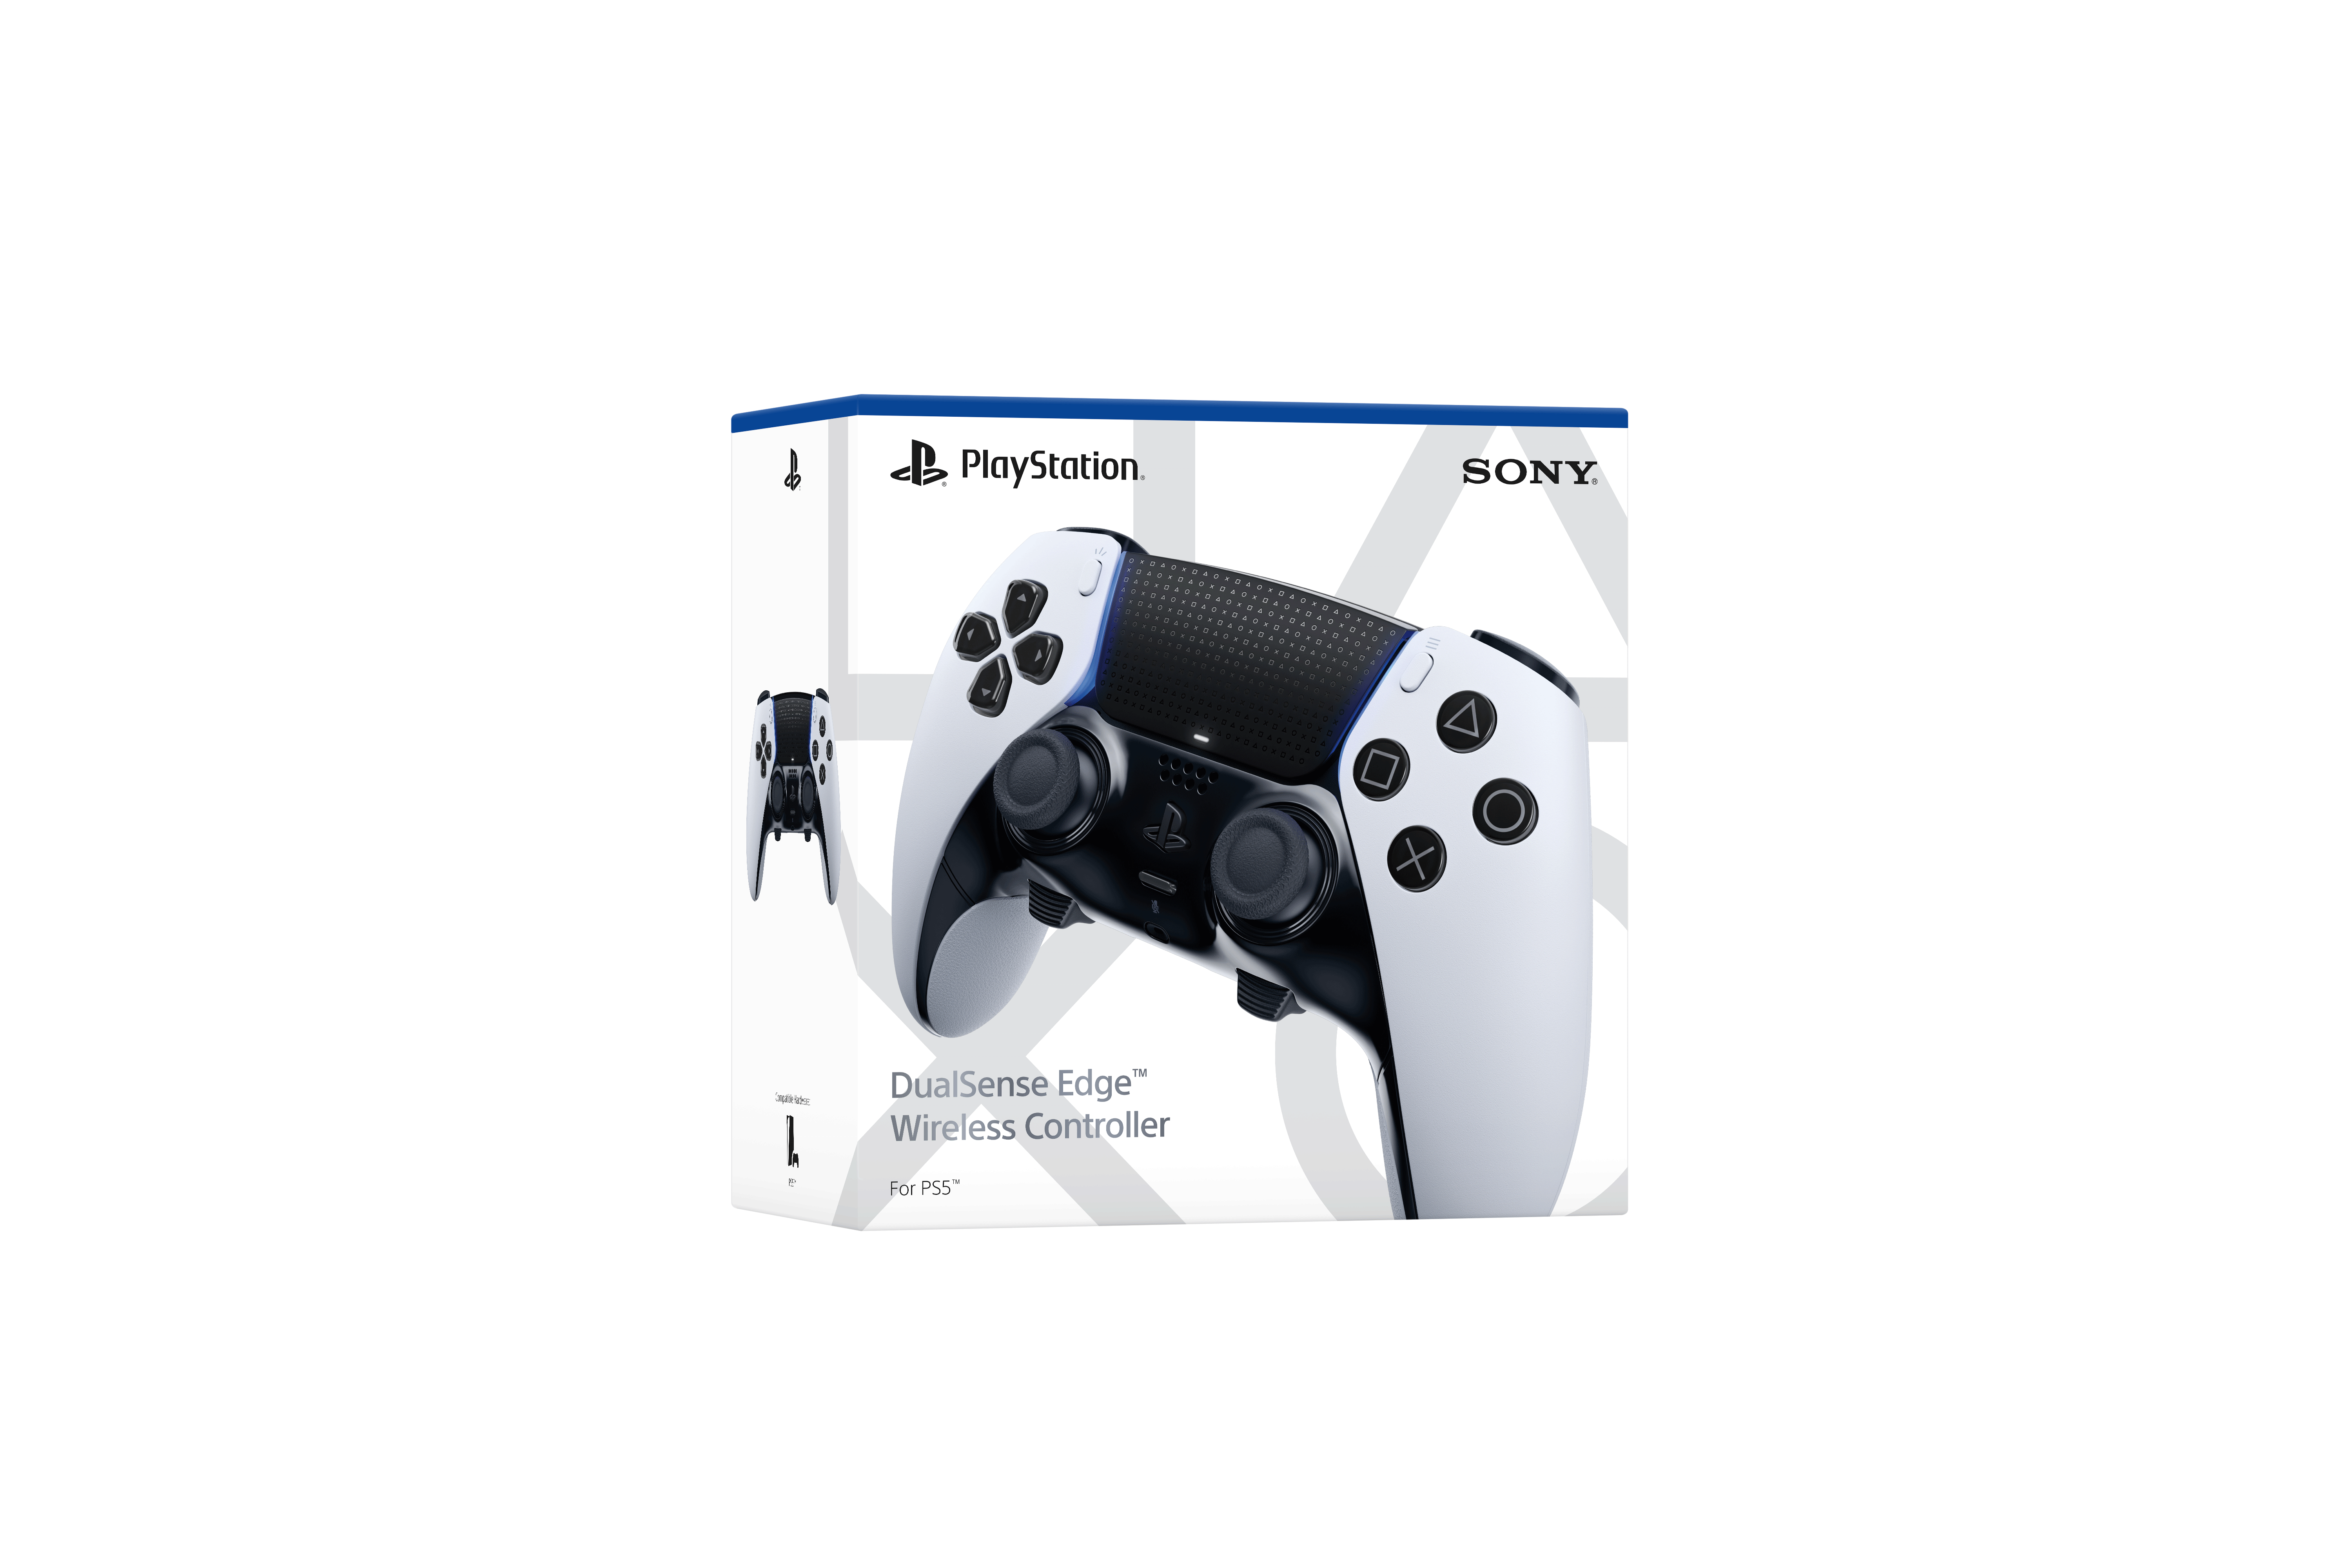 DualSense Edge PlayStation 5 Wireless Controller - A Cut Above the Rest